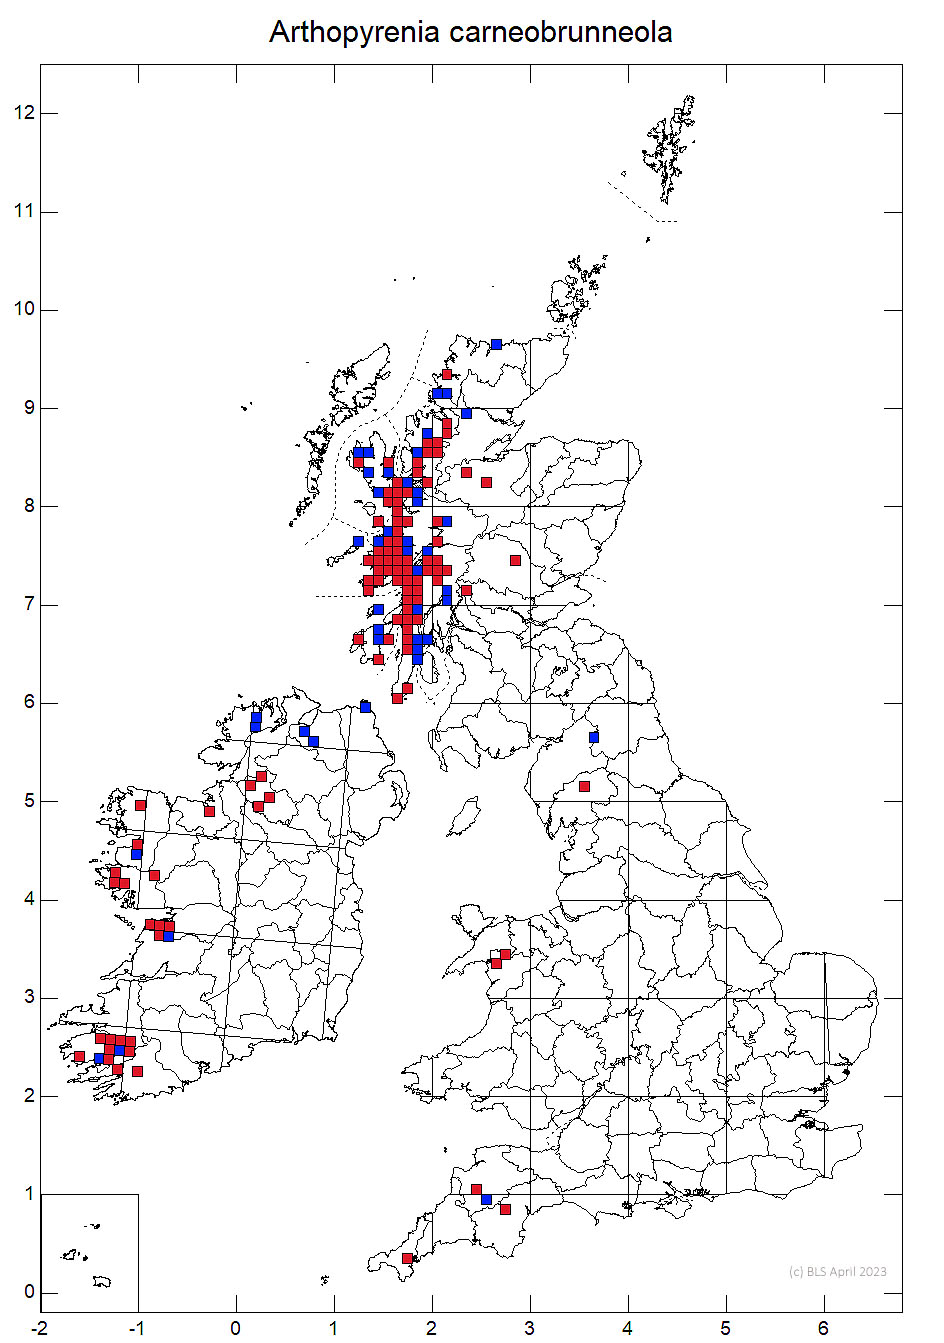 Arthopyrenia carneobrunneola 10km sq distribution map